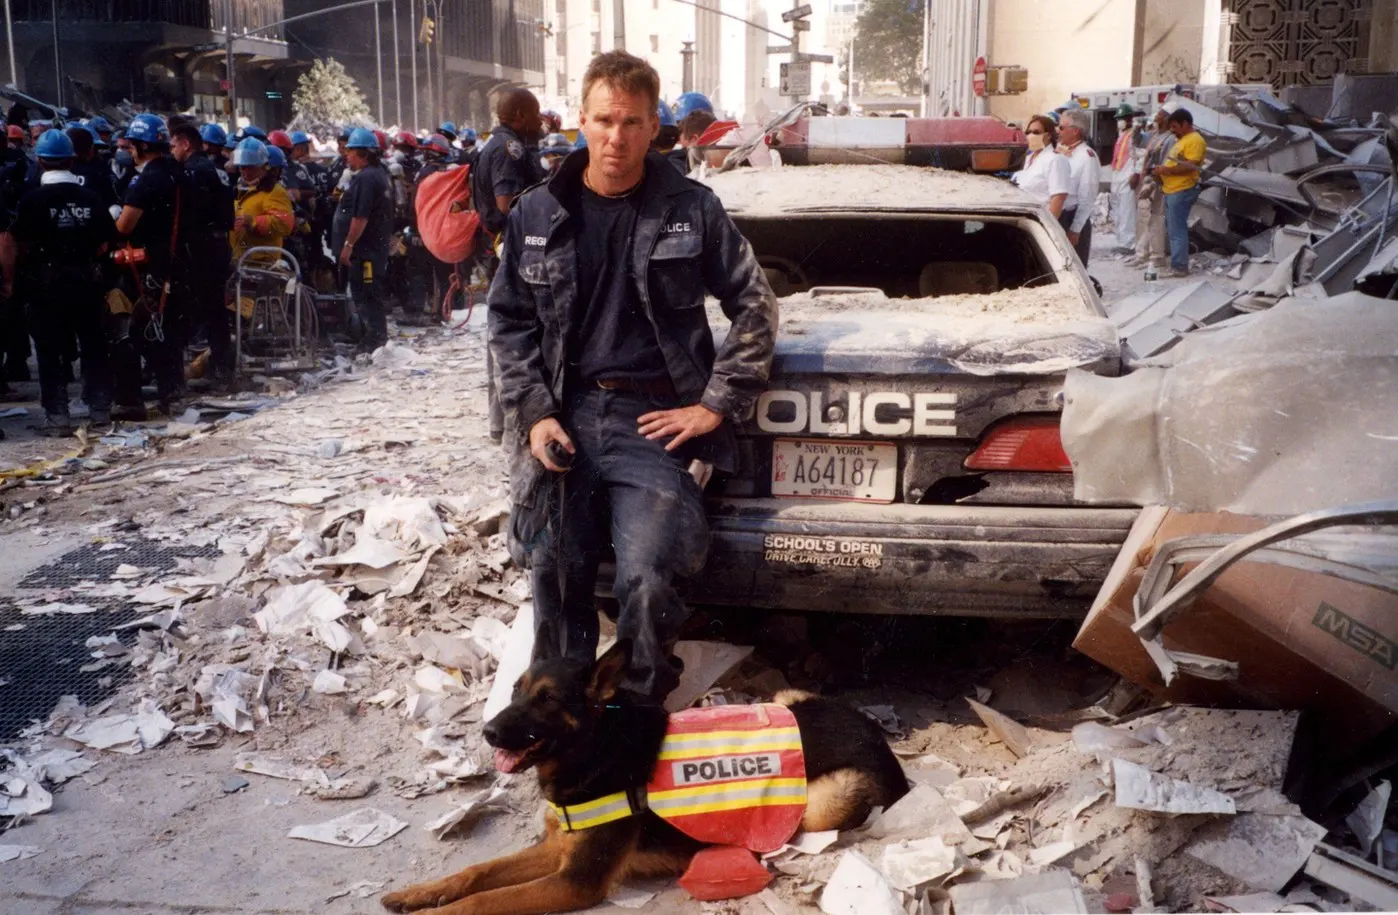 Trakr berger allemand secouriste World Trade Center